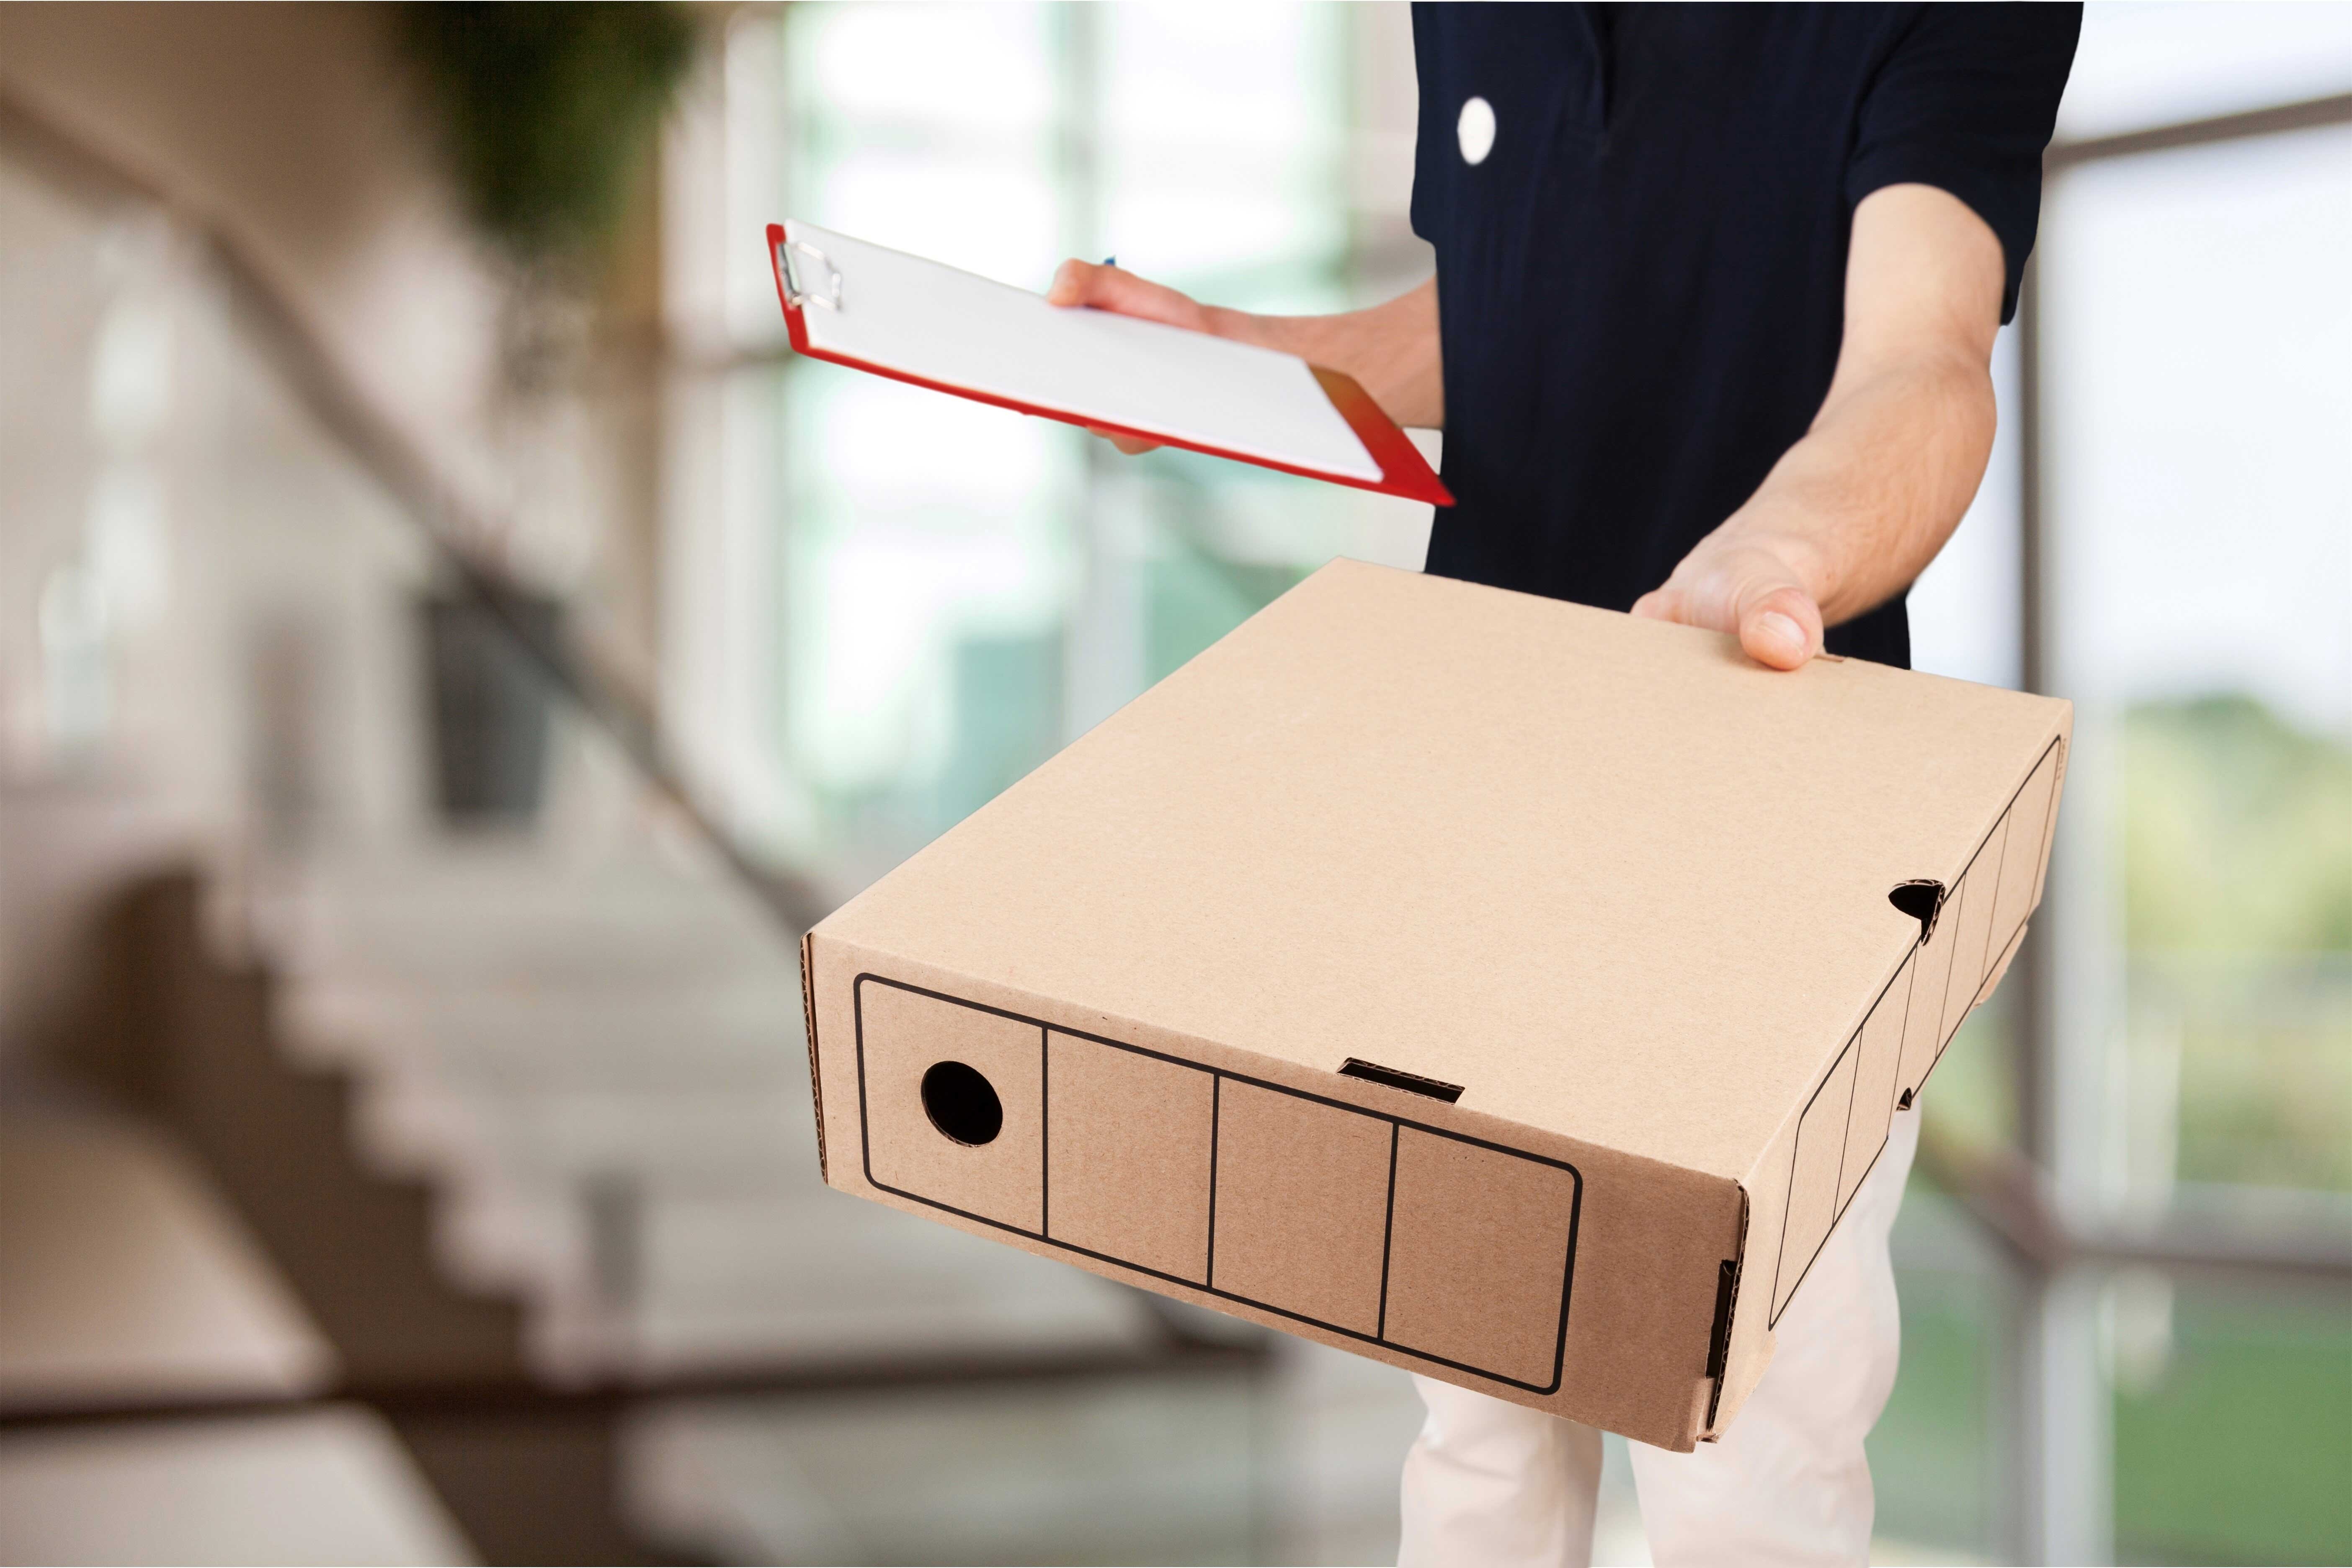 Package delivered. Коробка в руках. Курьер с коробкой в руках. Доставщик с коробками в руках. Передает коробку.